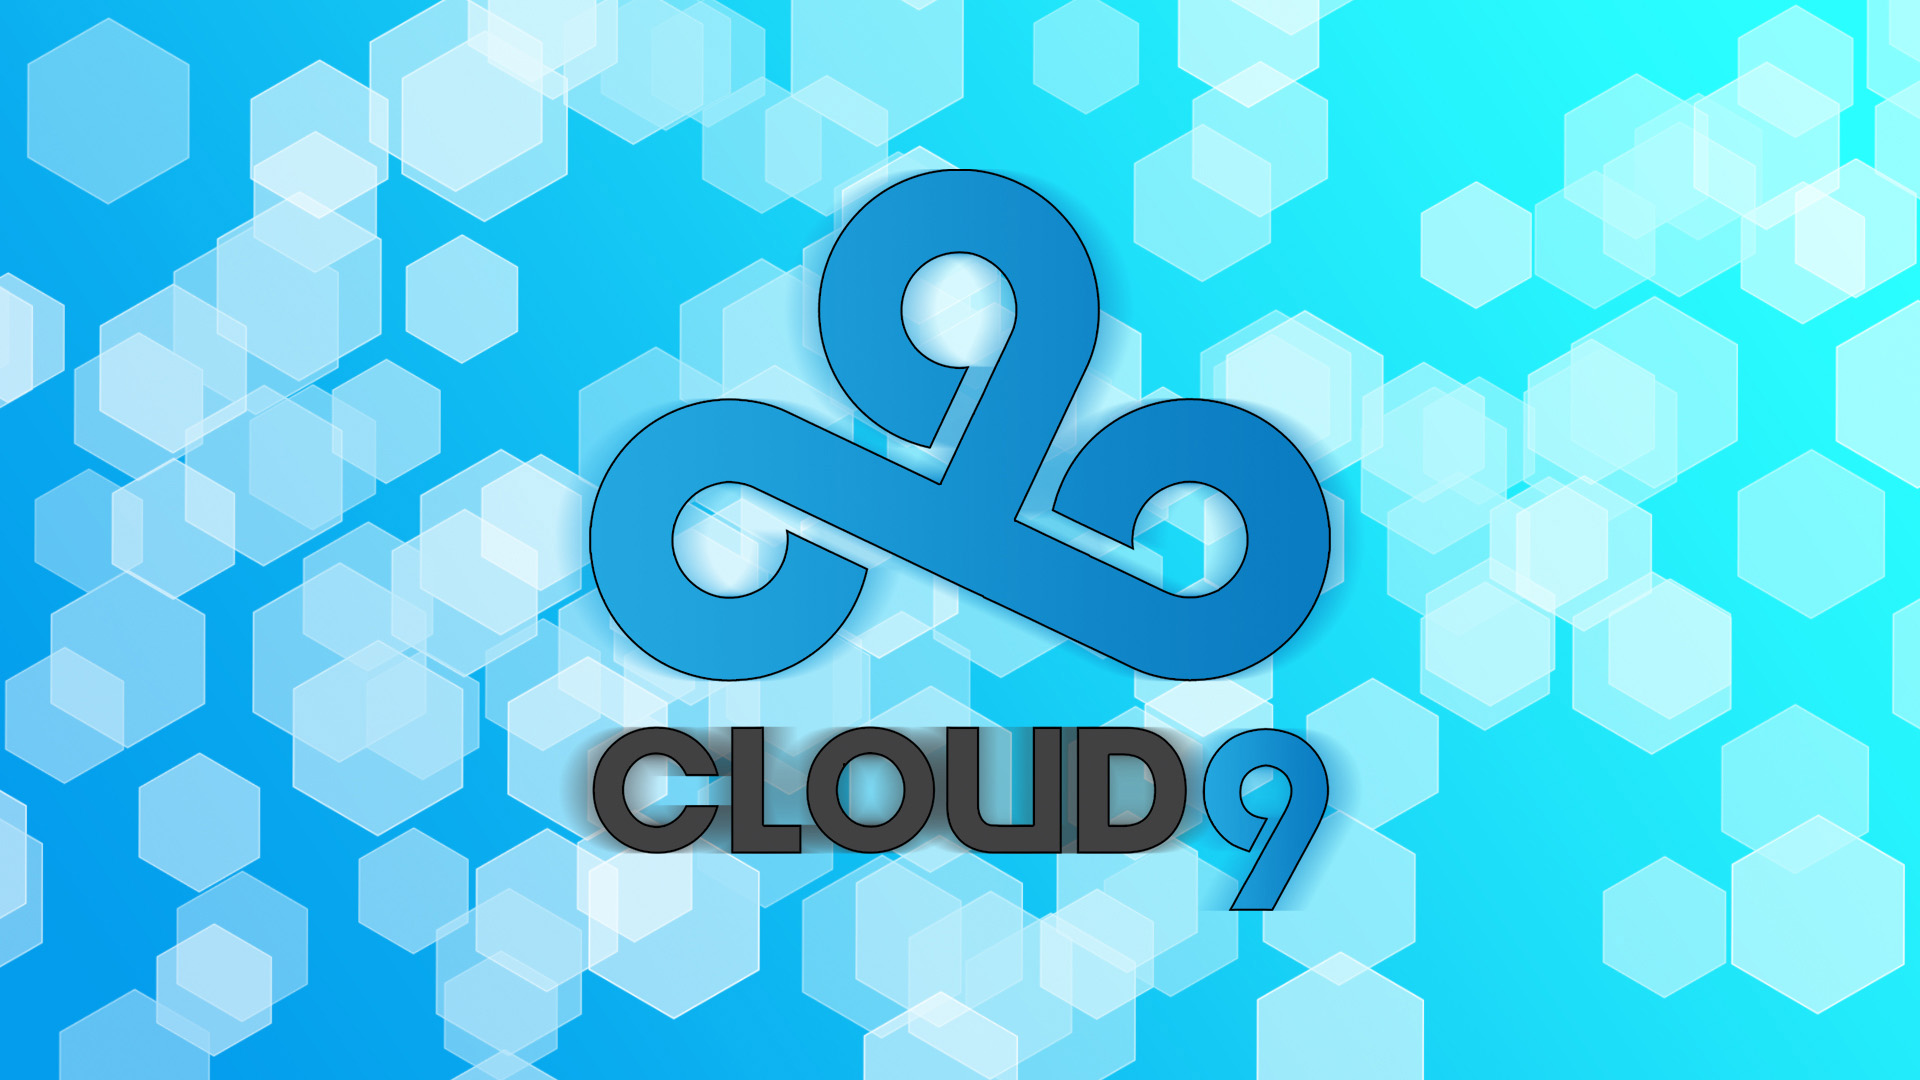 Cloud9 Wallpaper Bc Gb Gaming Esports News